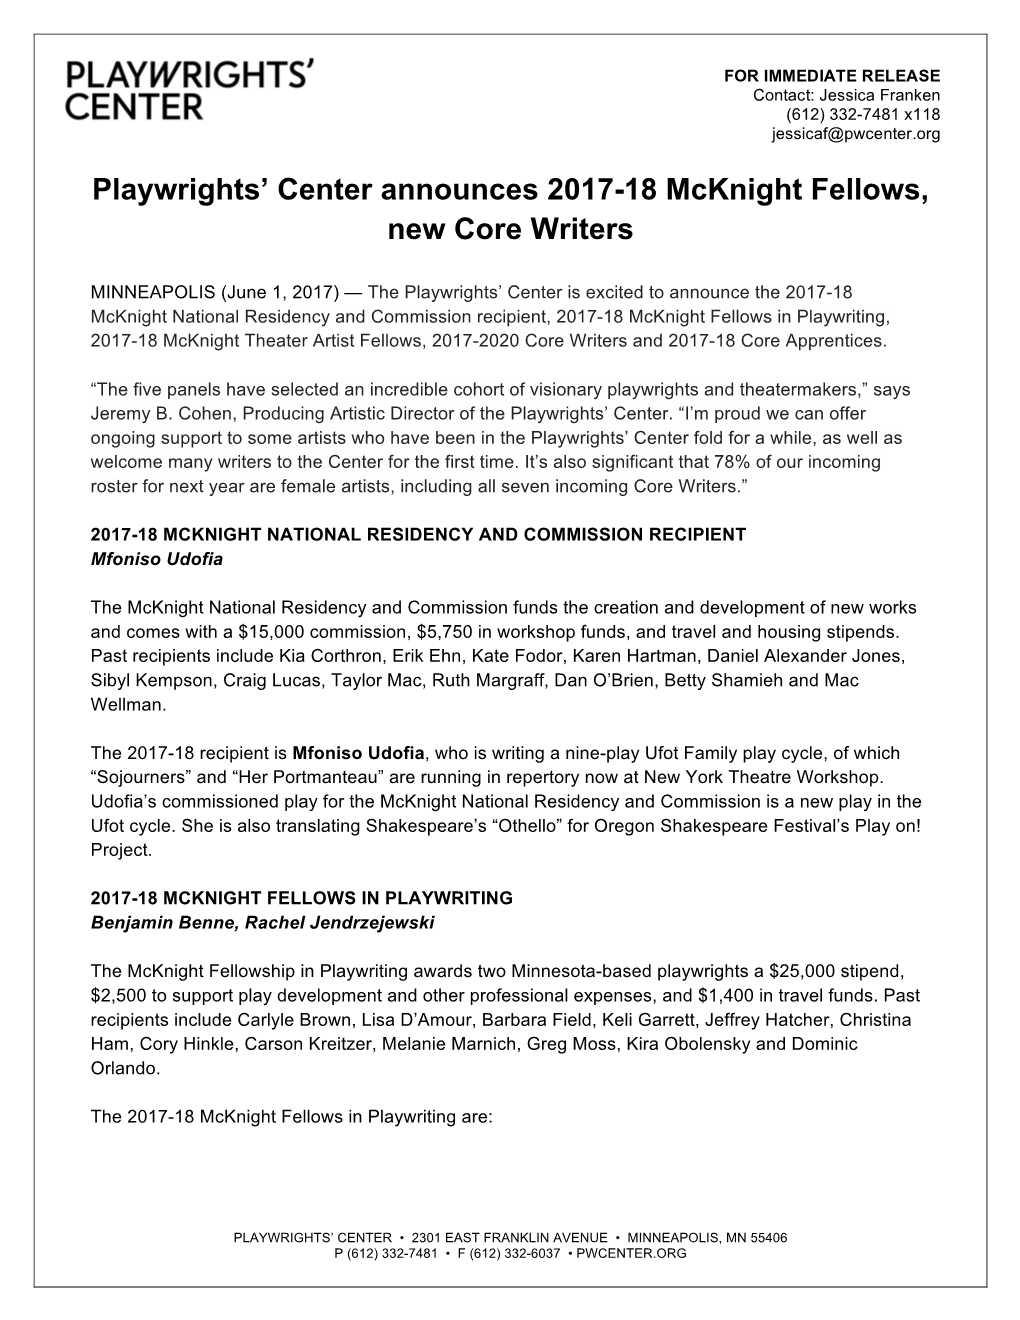 Playwrights' Center Announces 2017-18 Mcknight Fellows, New